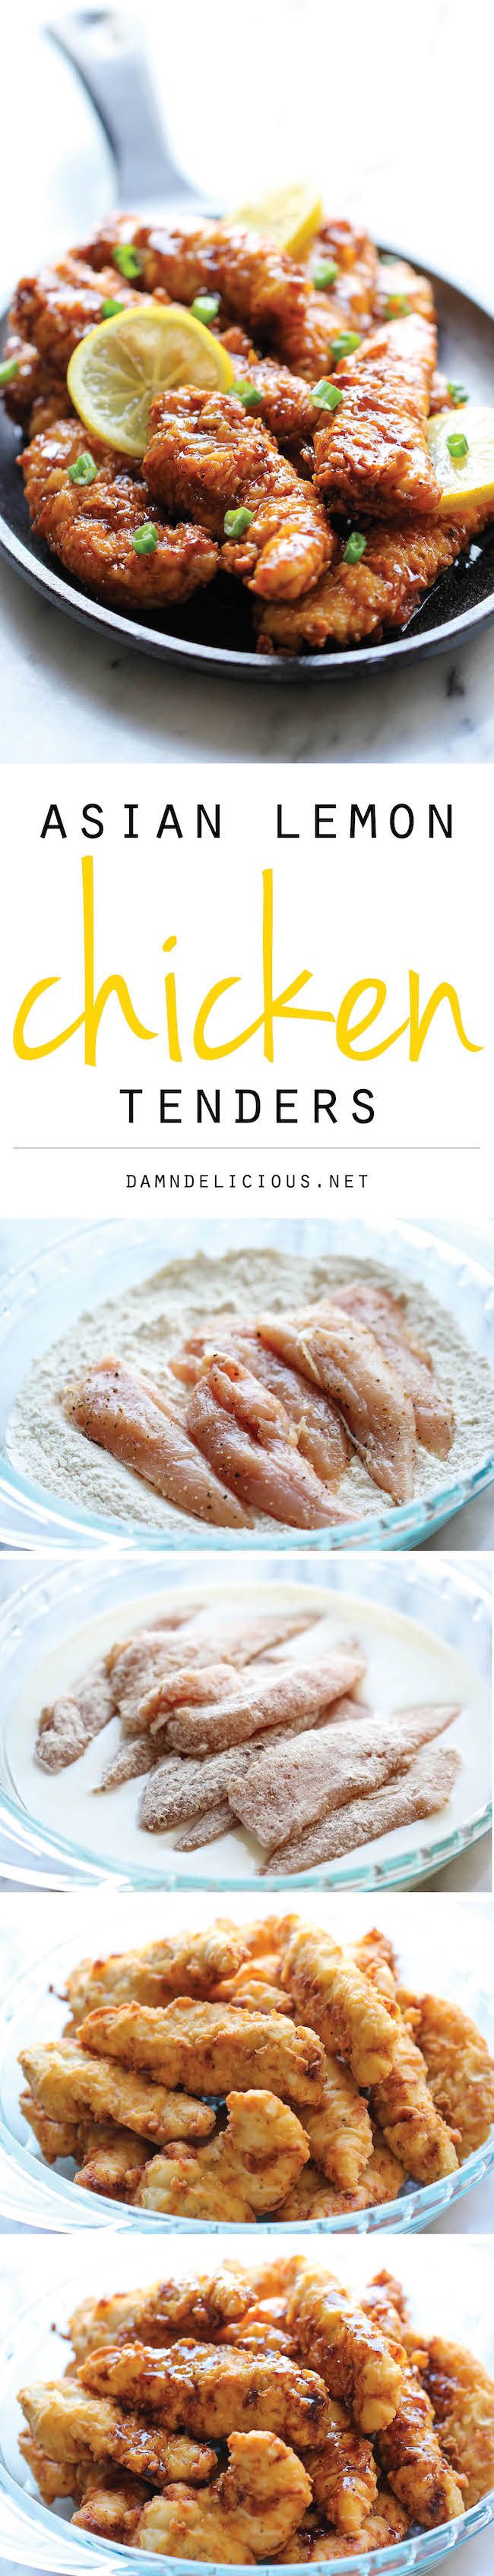 Asian Lemon Chicken Tenders – A wonderful asian twist to your favorite chicken tenders, tossed in the most heavenly sweet, lemon